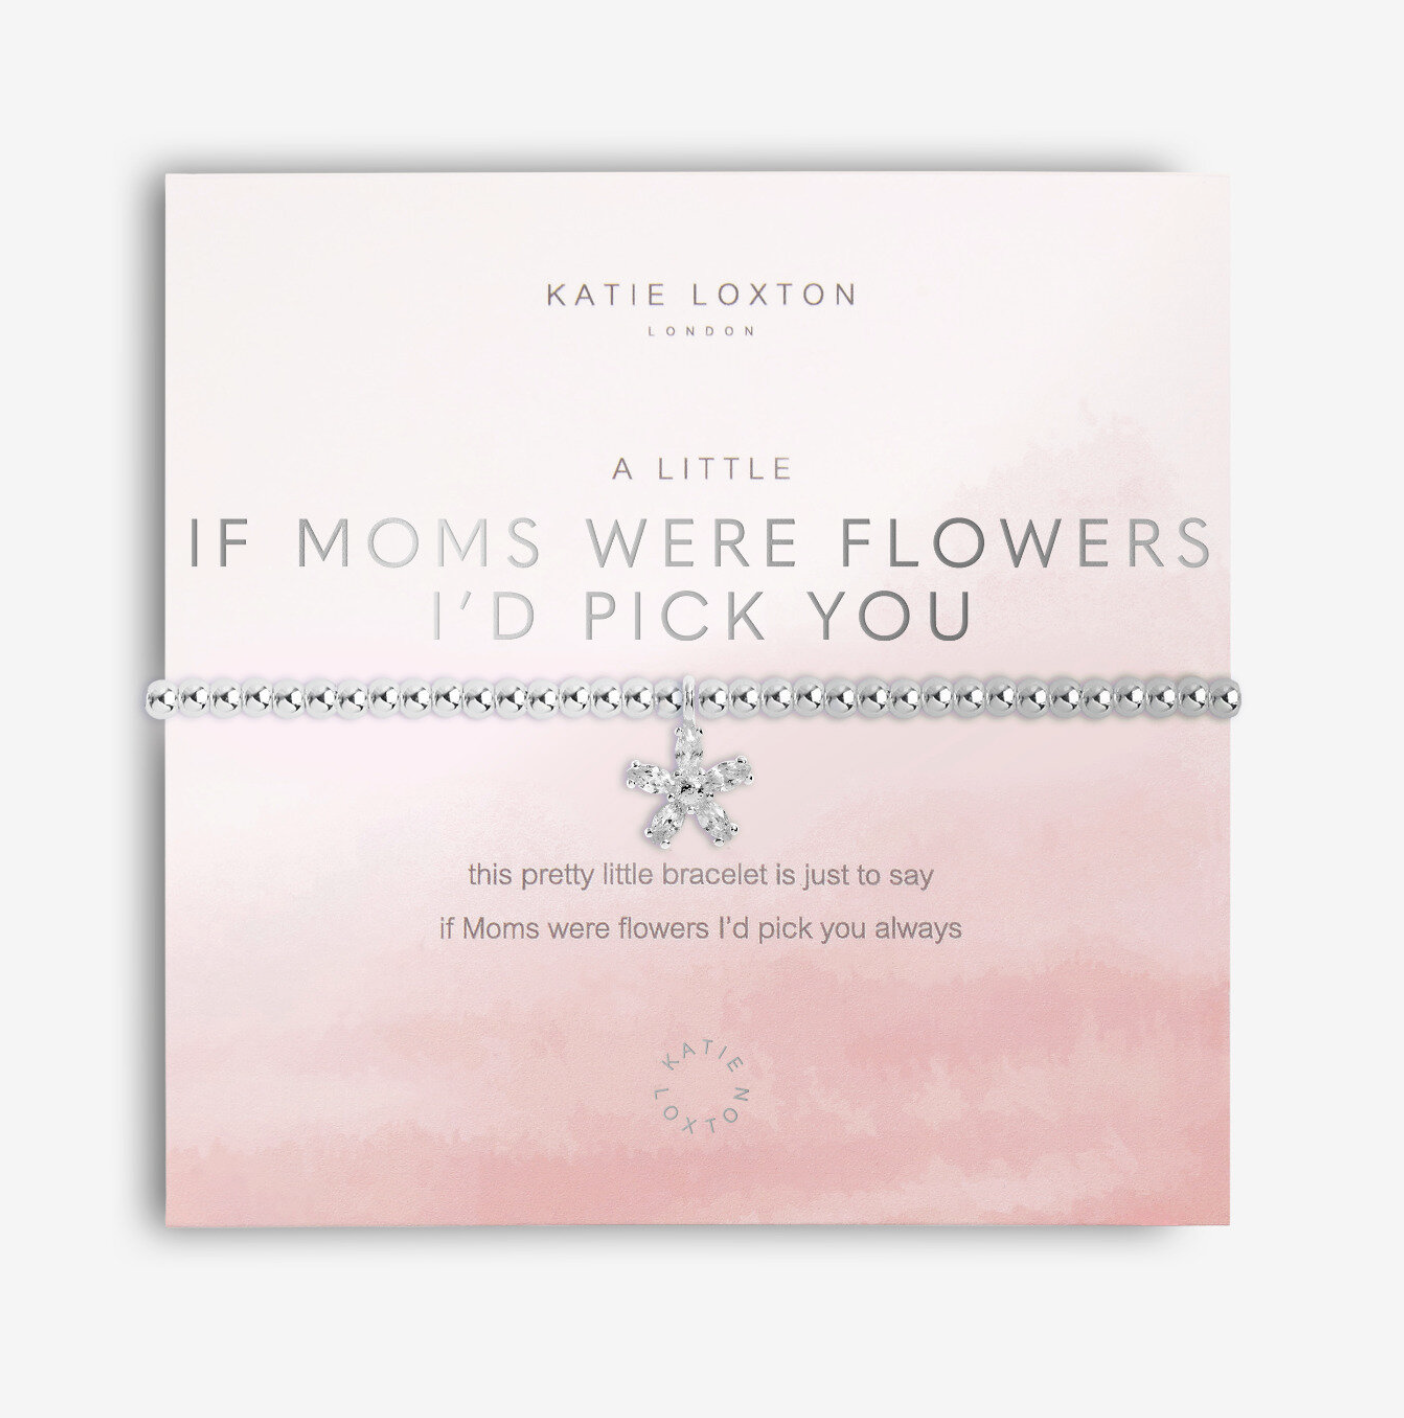 A Little "If Moms Were Flowers, I'd Pick You" Bracelet